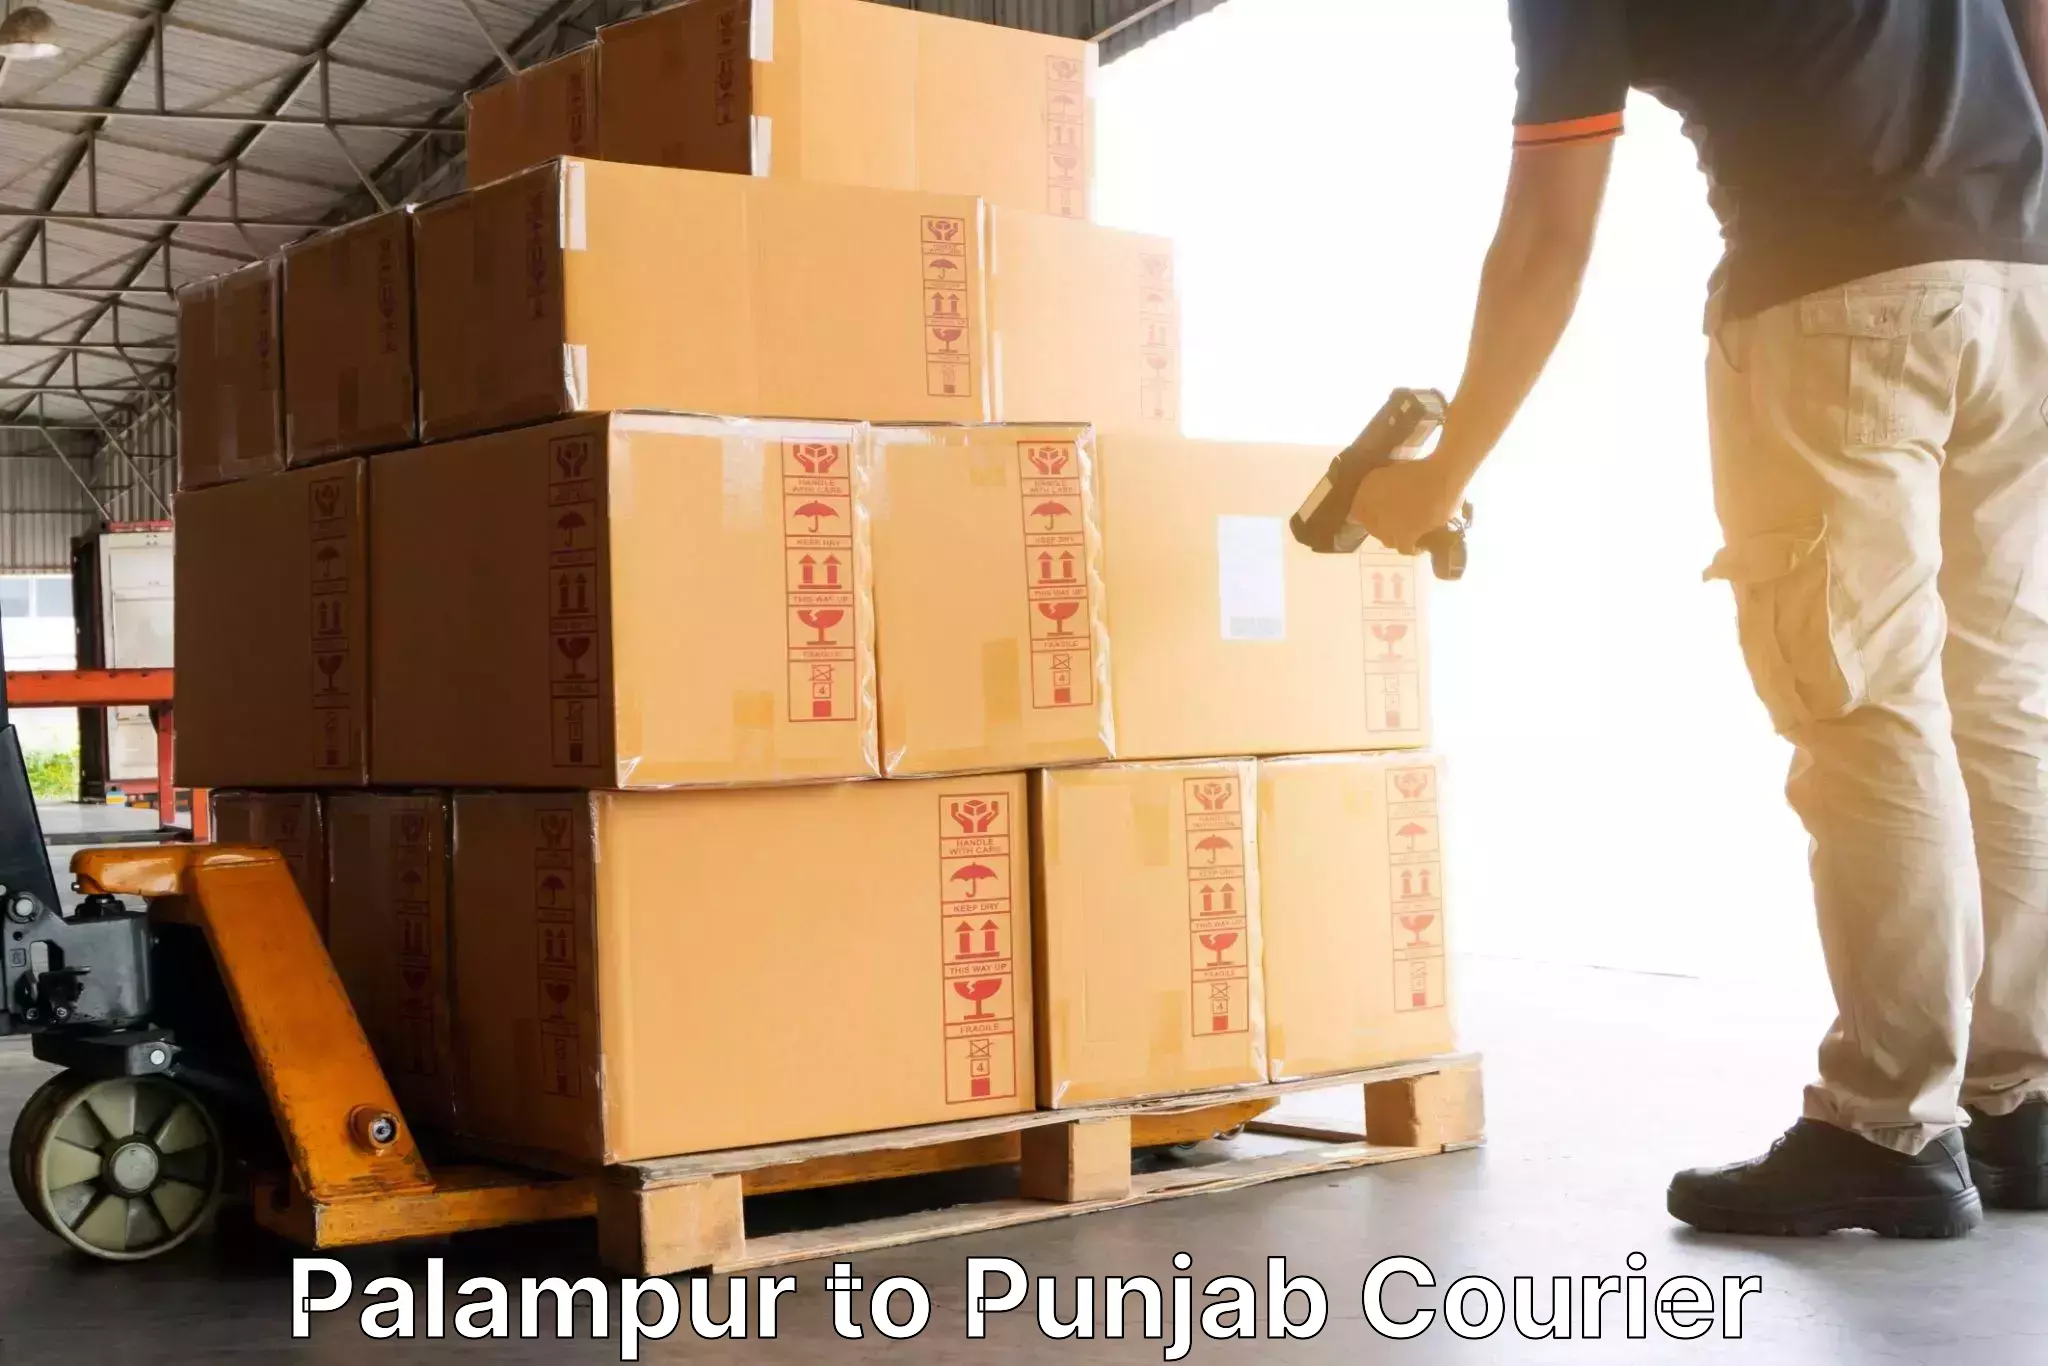 Global logistics network Palampur to Jalandhar